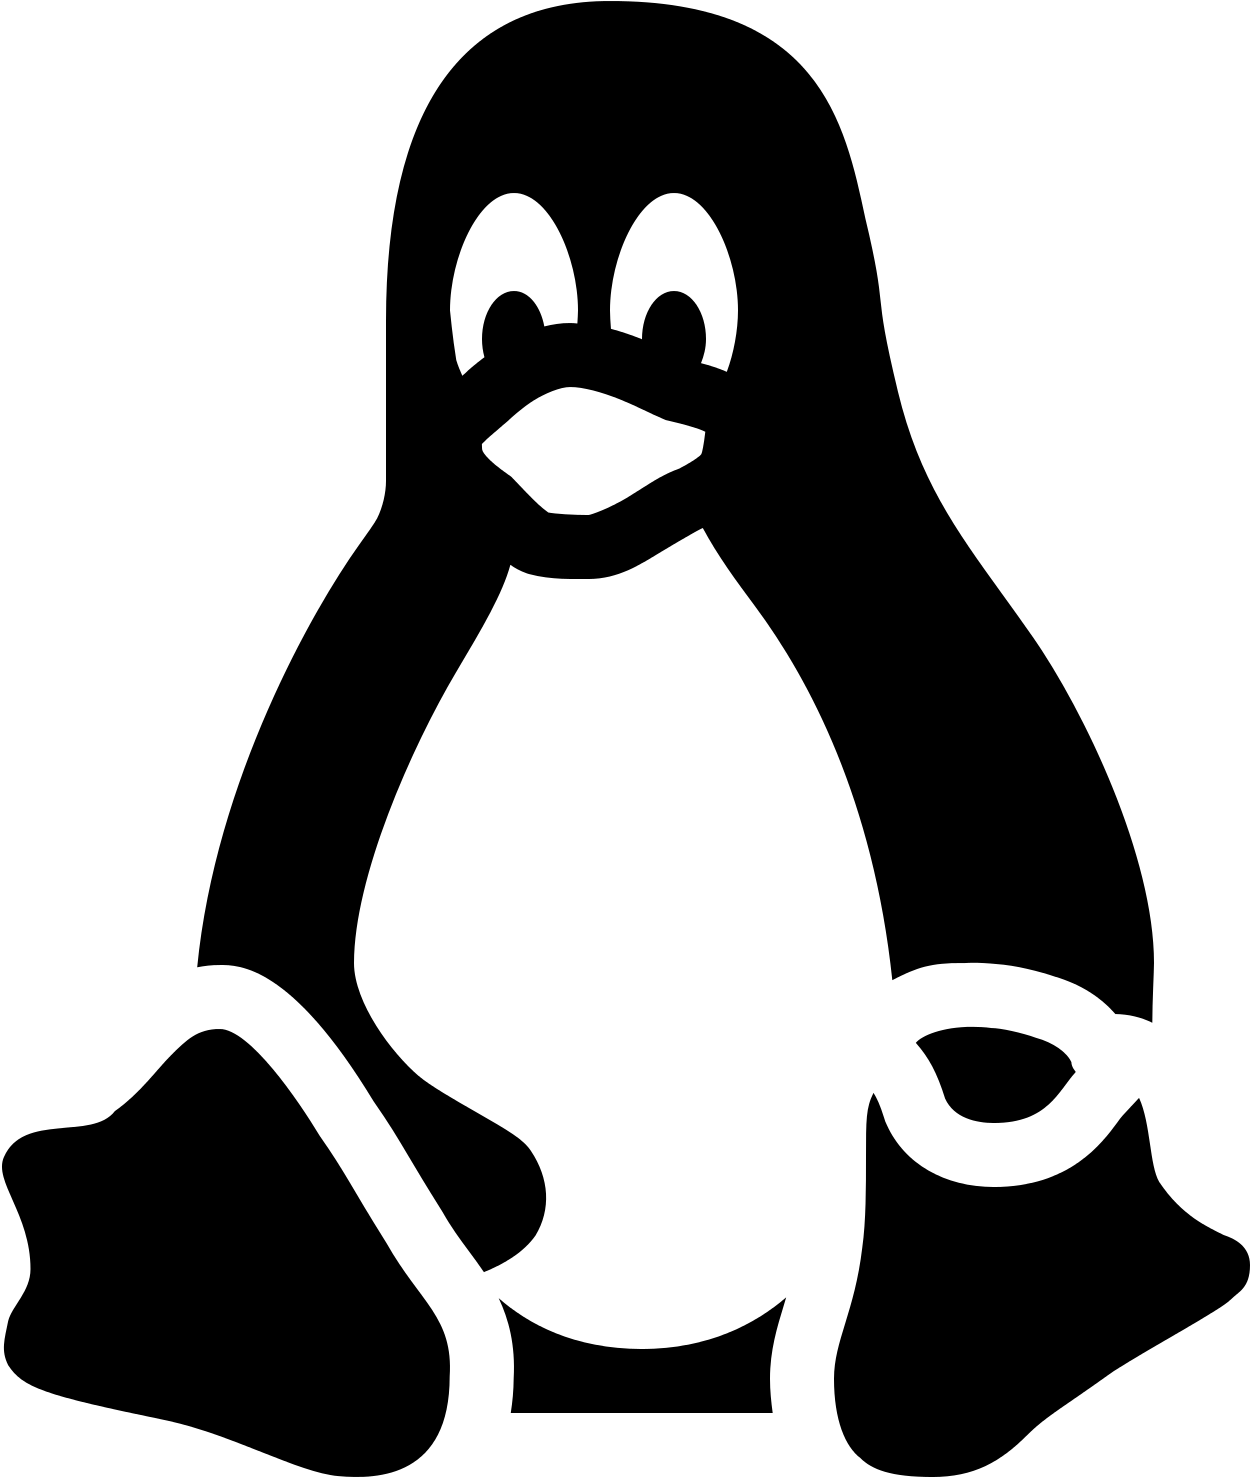 Linux Penguin Logo Silhouette